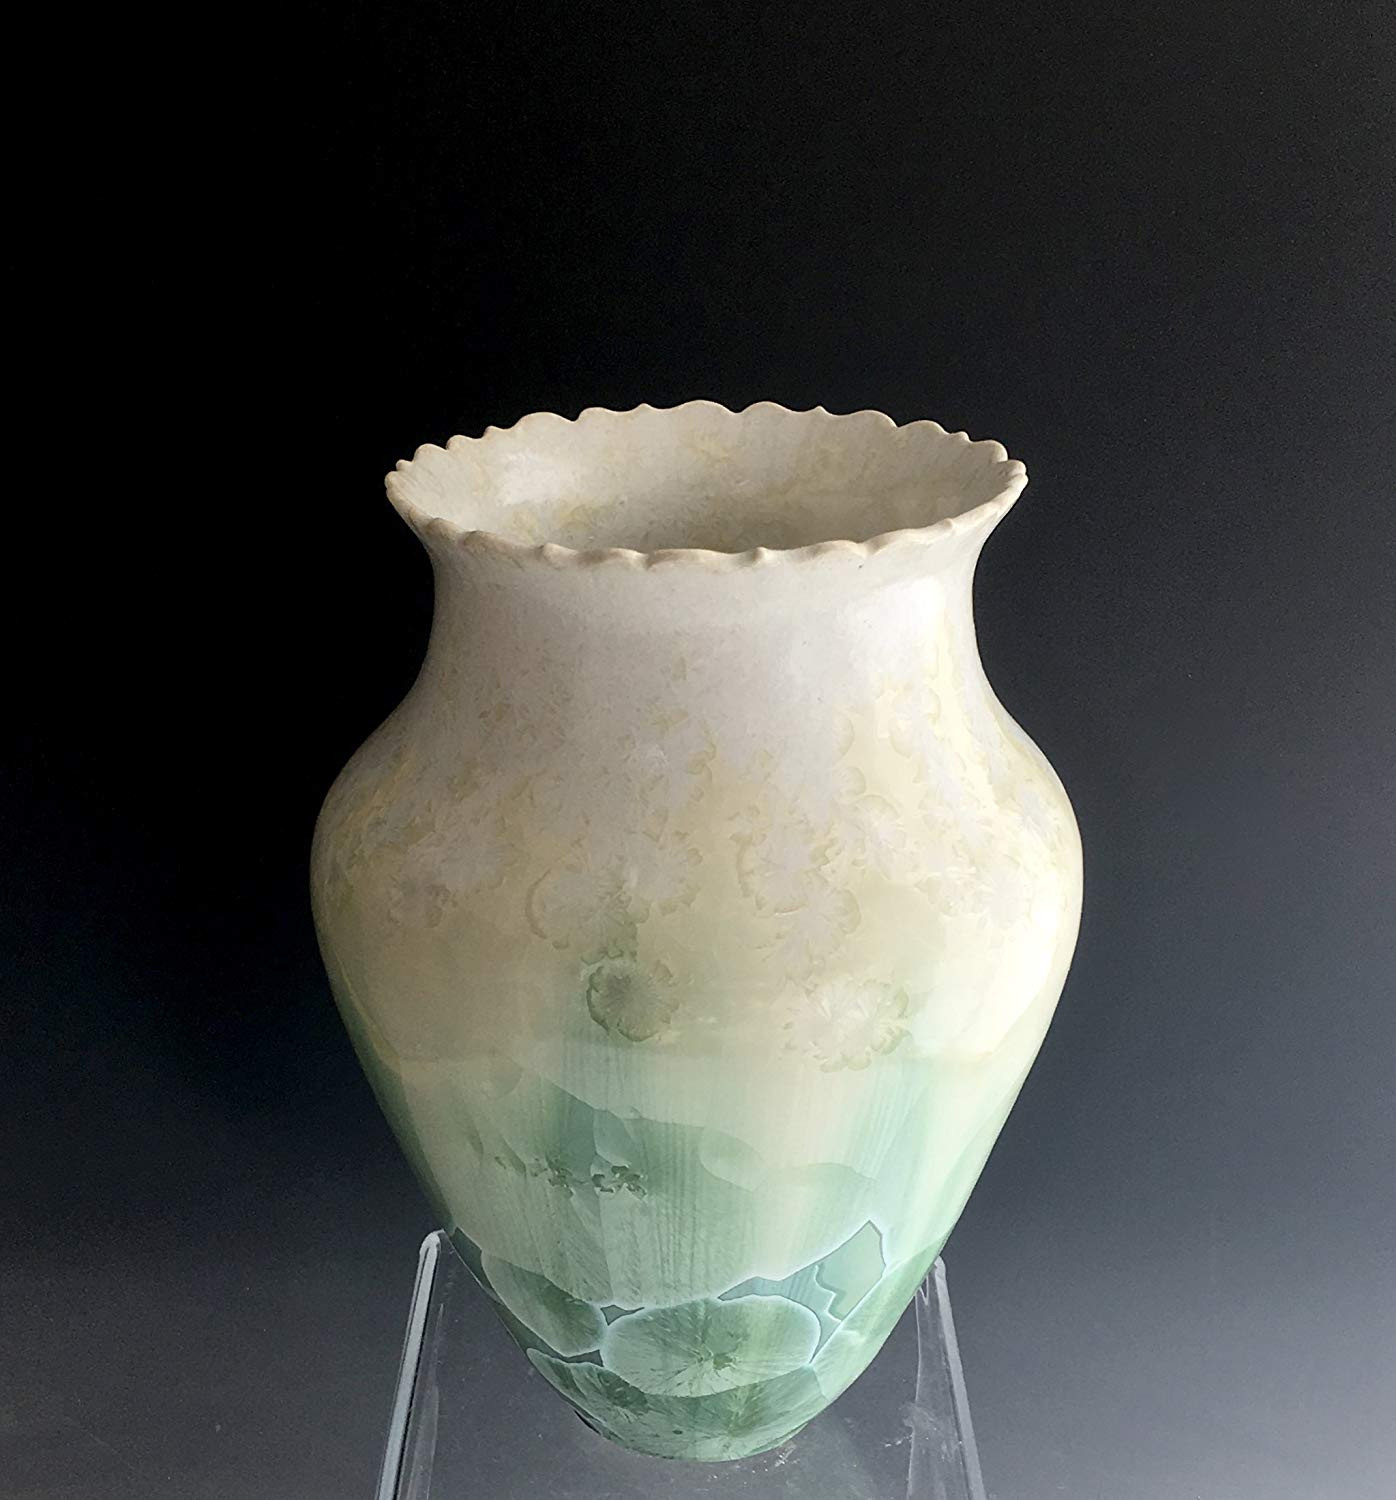 Glass Cylinder Vases Cheap Of Amazon Com Handmade Ceramic Vase Crystalline Pottery Porcelain with Regard to Amazon Com Handmade Ceramic Vase Crystalline Pottery Porcelain Flower Vase by Susan Fontaine Pottery Handmade